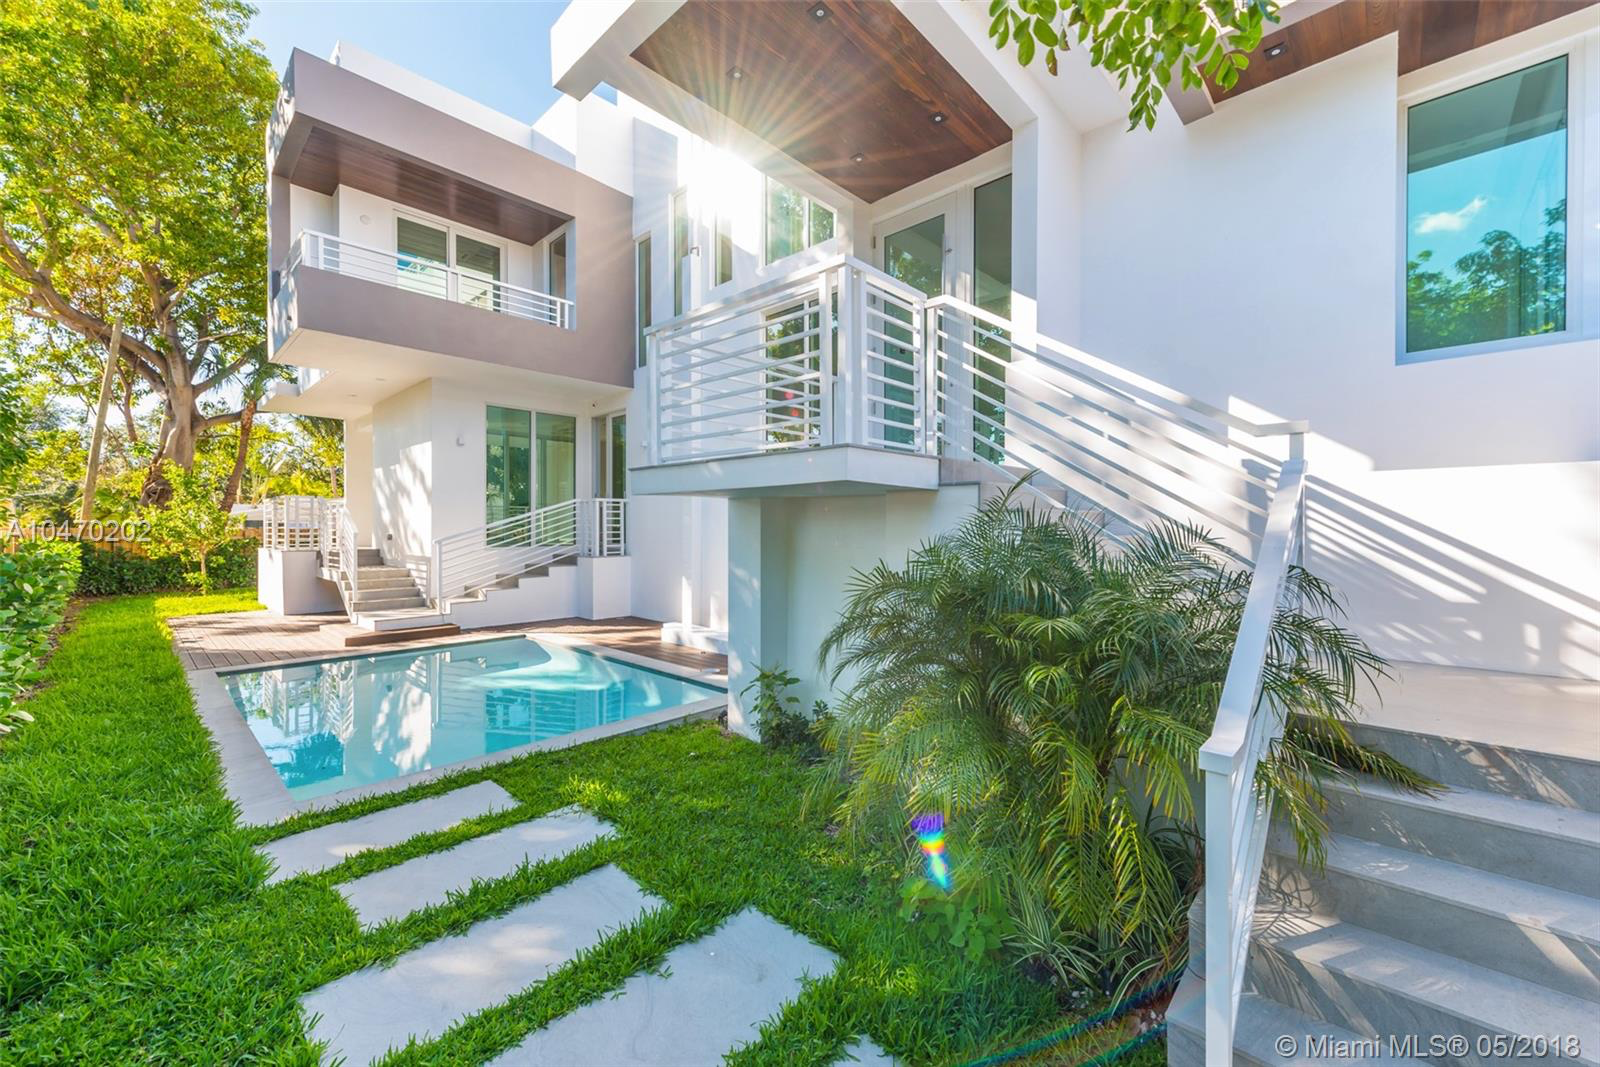 Miami’s Finest Townhomes – Miami Beach, Key Biscayne, Bay Harbor